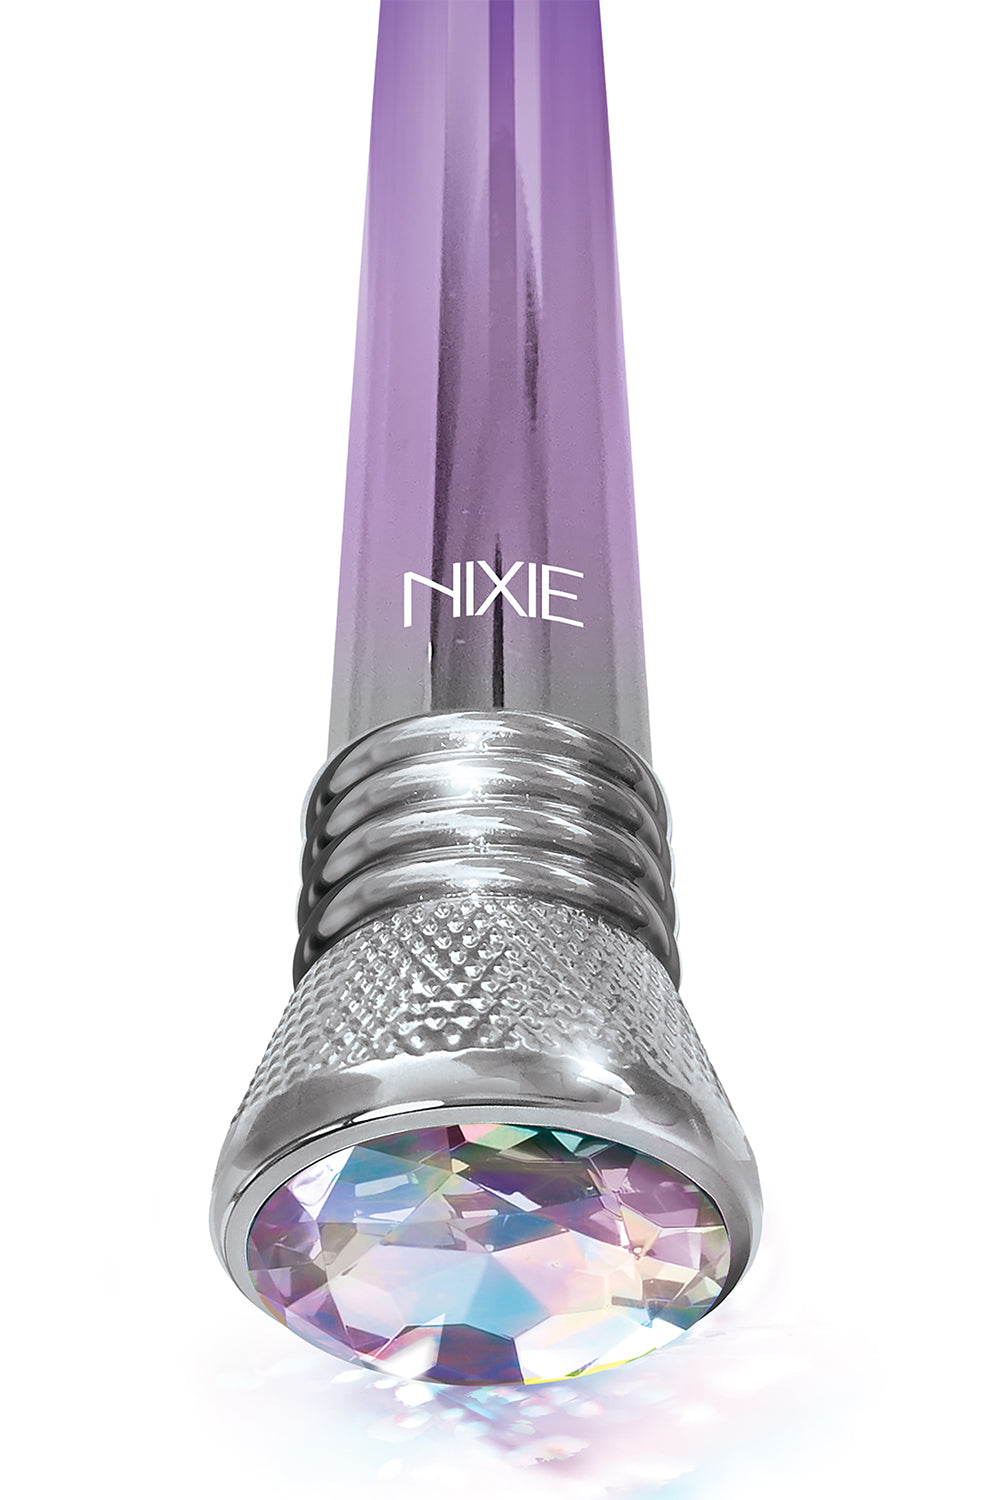 Nixie Jewel Ombre G-spot Vibe Purple Glow